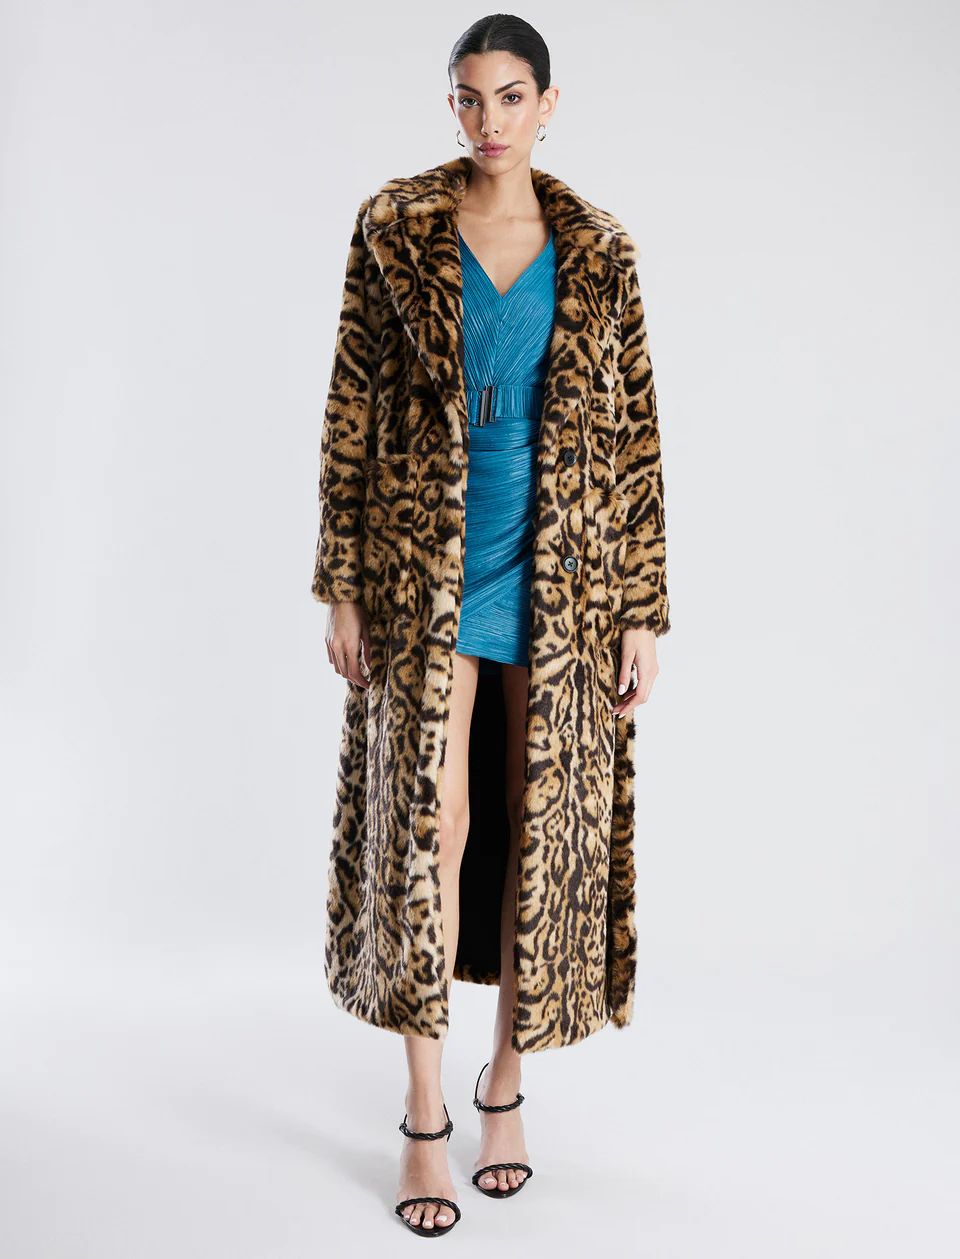 Belted Leopard Full Length Coat | Outerwear | BCBGMAXAZRIA | BCBG Max Azria 